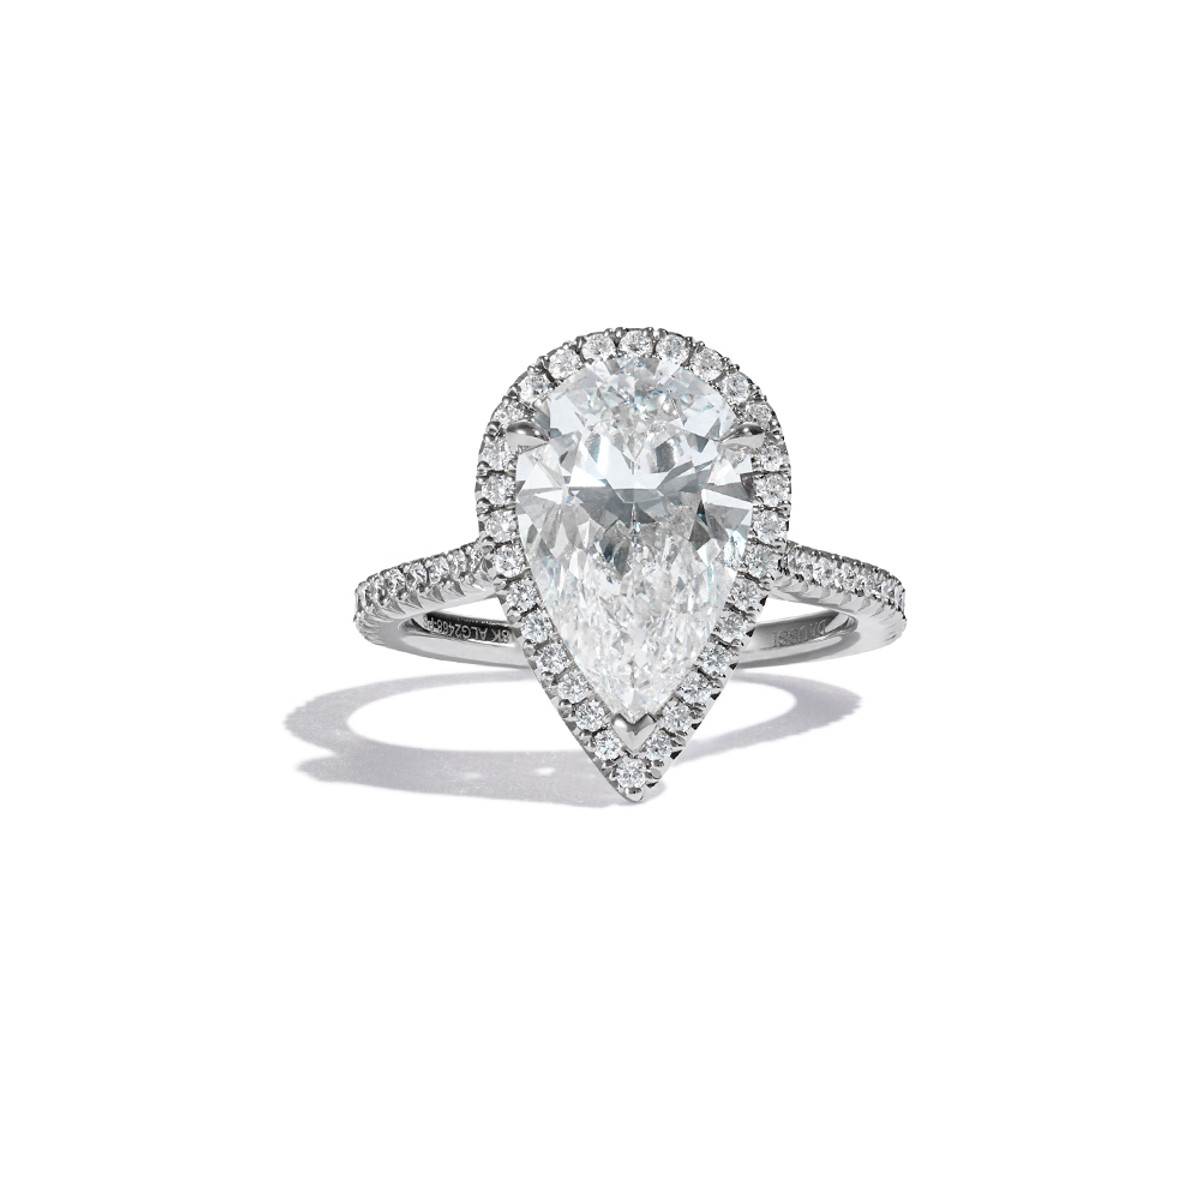 Henri Daussi 18k White Gold 4.04ct Pear Diamond Halo Engagement Ring-41538 Product Image